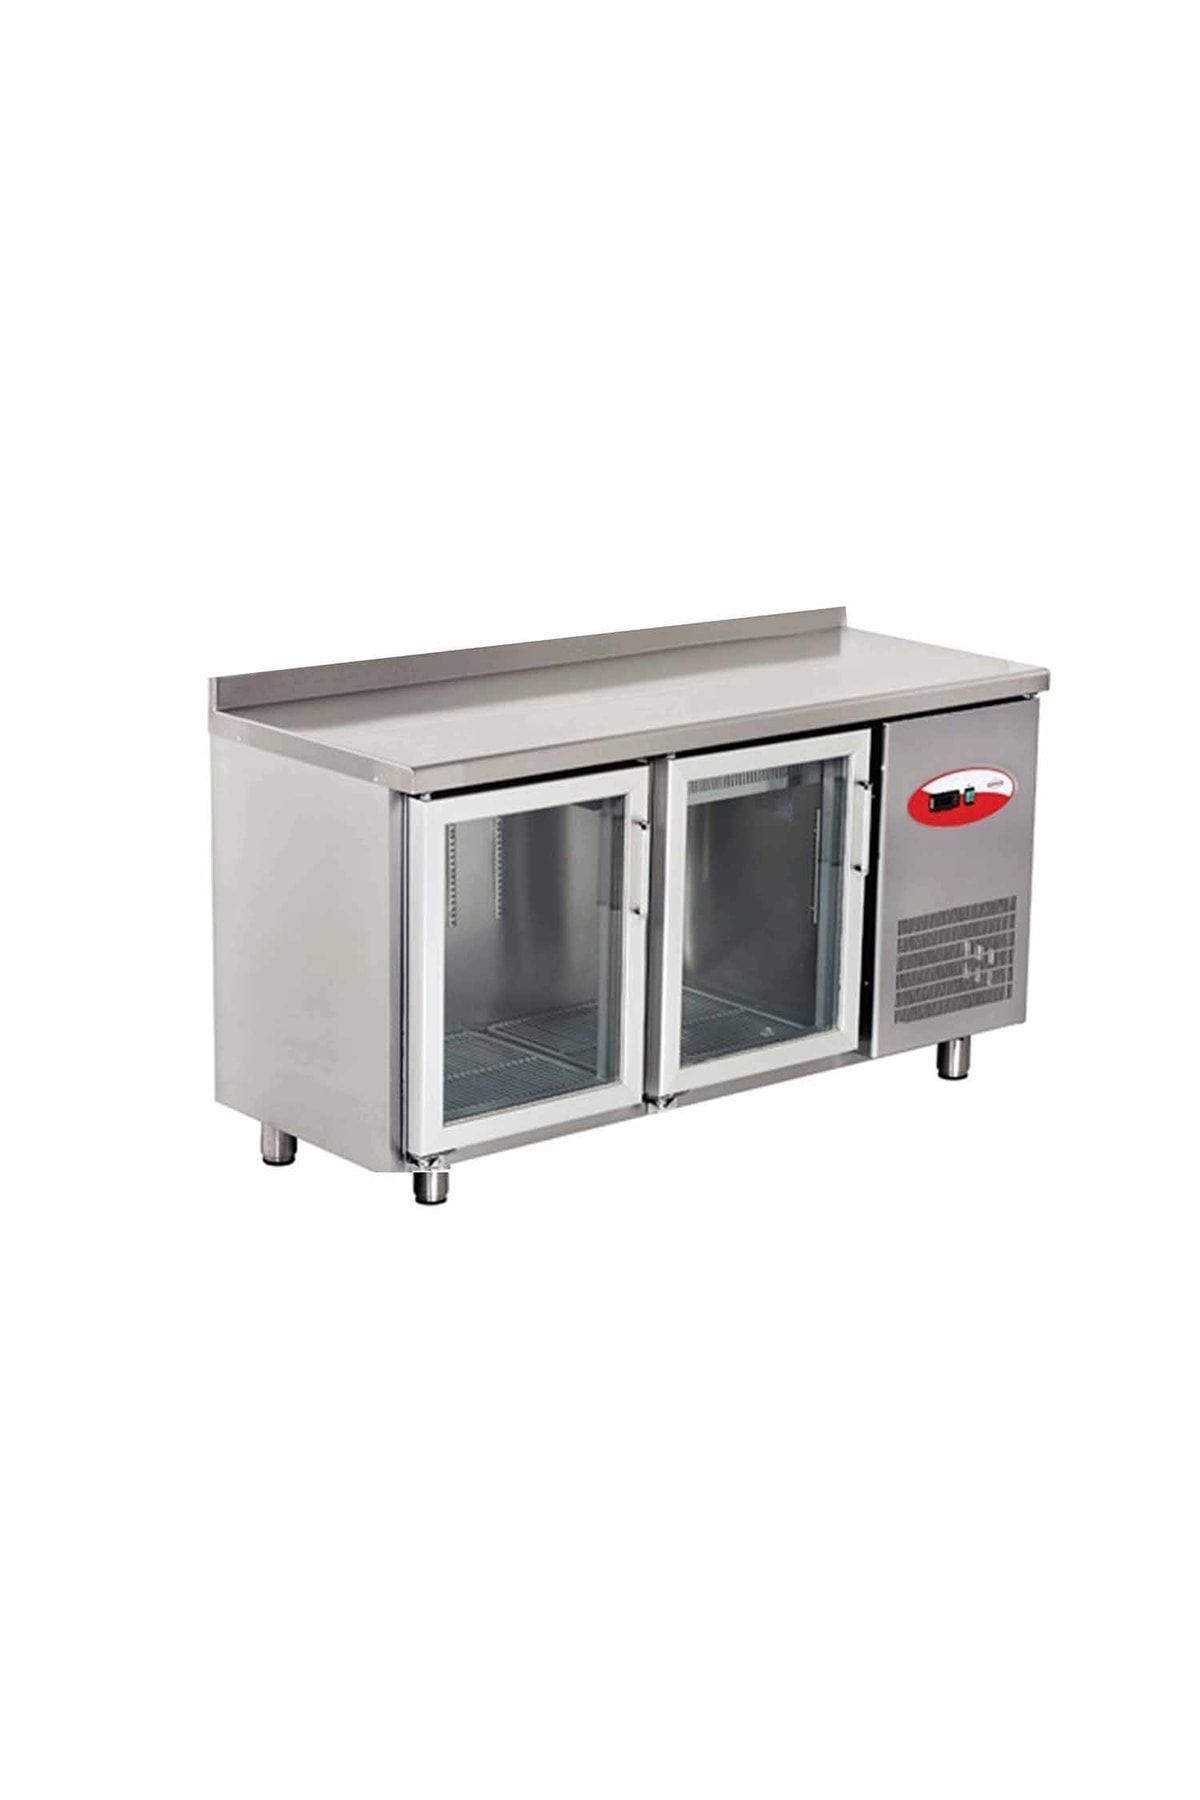 Empero Tezgah Tipi Buzdolabı (Fanlı) - 2 Cam Kapılı - 150x70x85 Cm